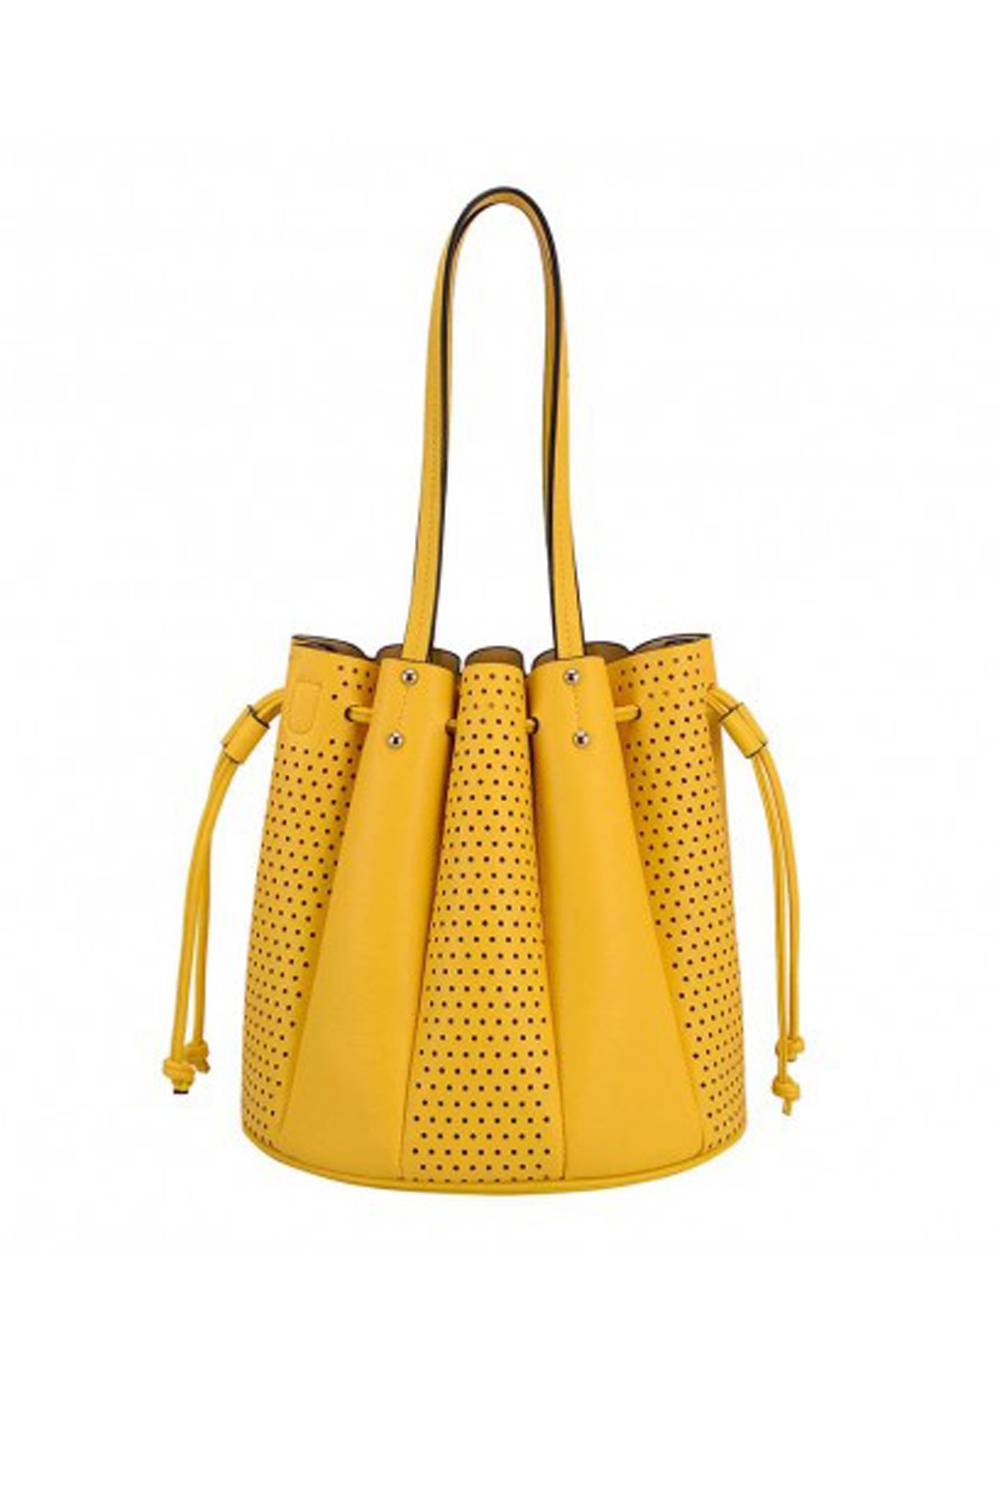 Davidjones Yellow Handbags | Odel.lk